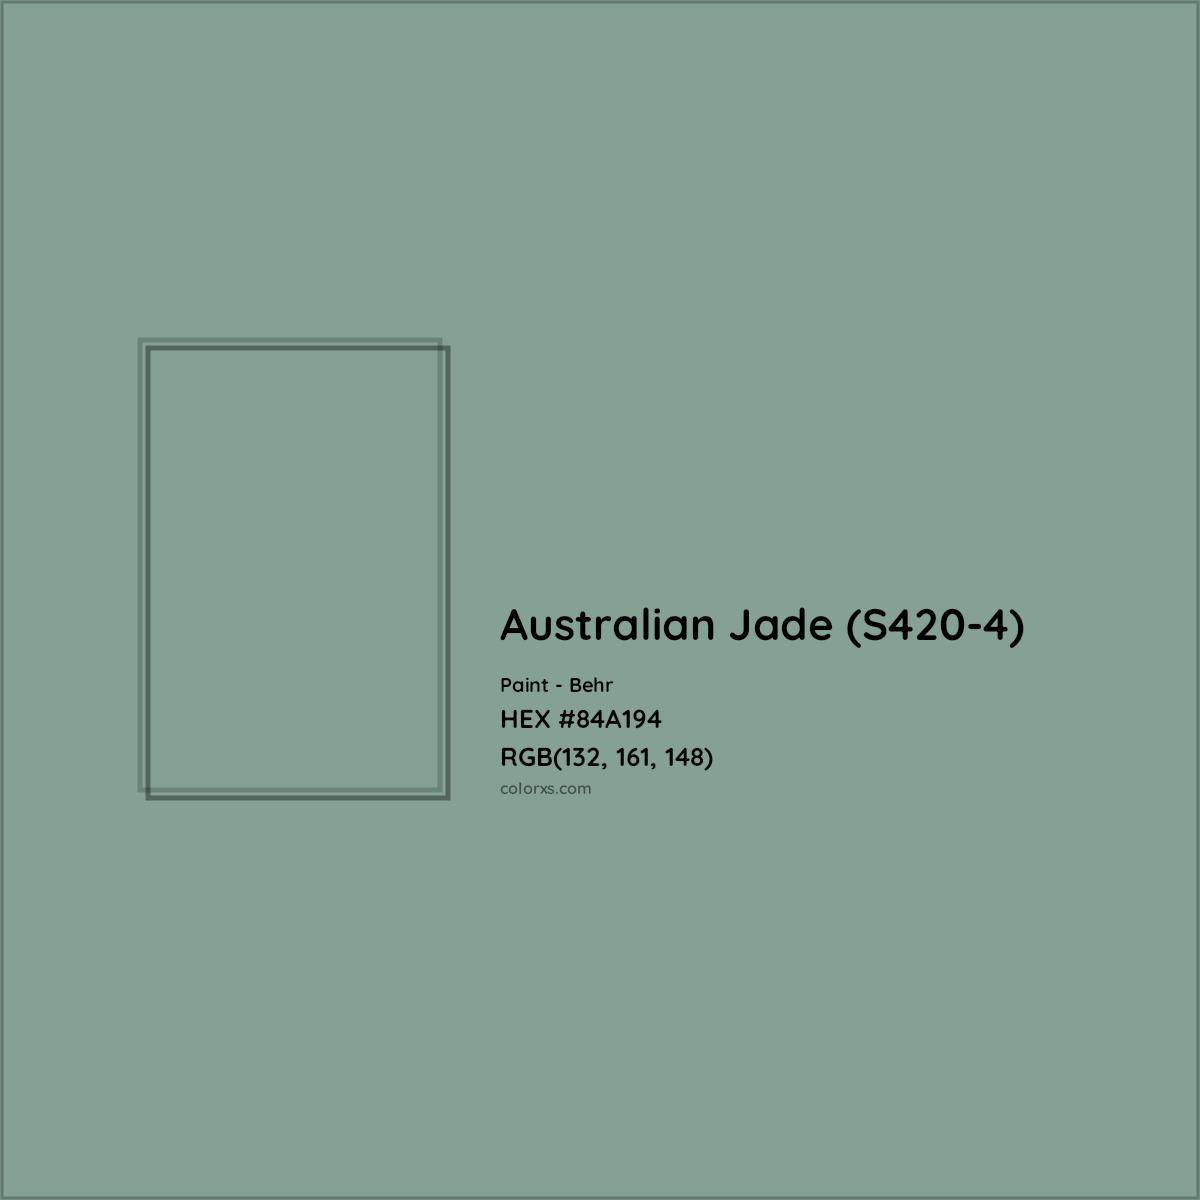 HEX #84A194 Australian Jade (S420-4) Paint Behr - Color Code